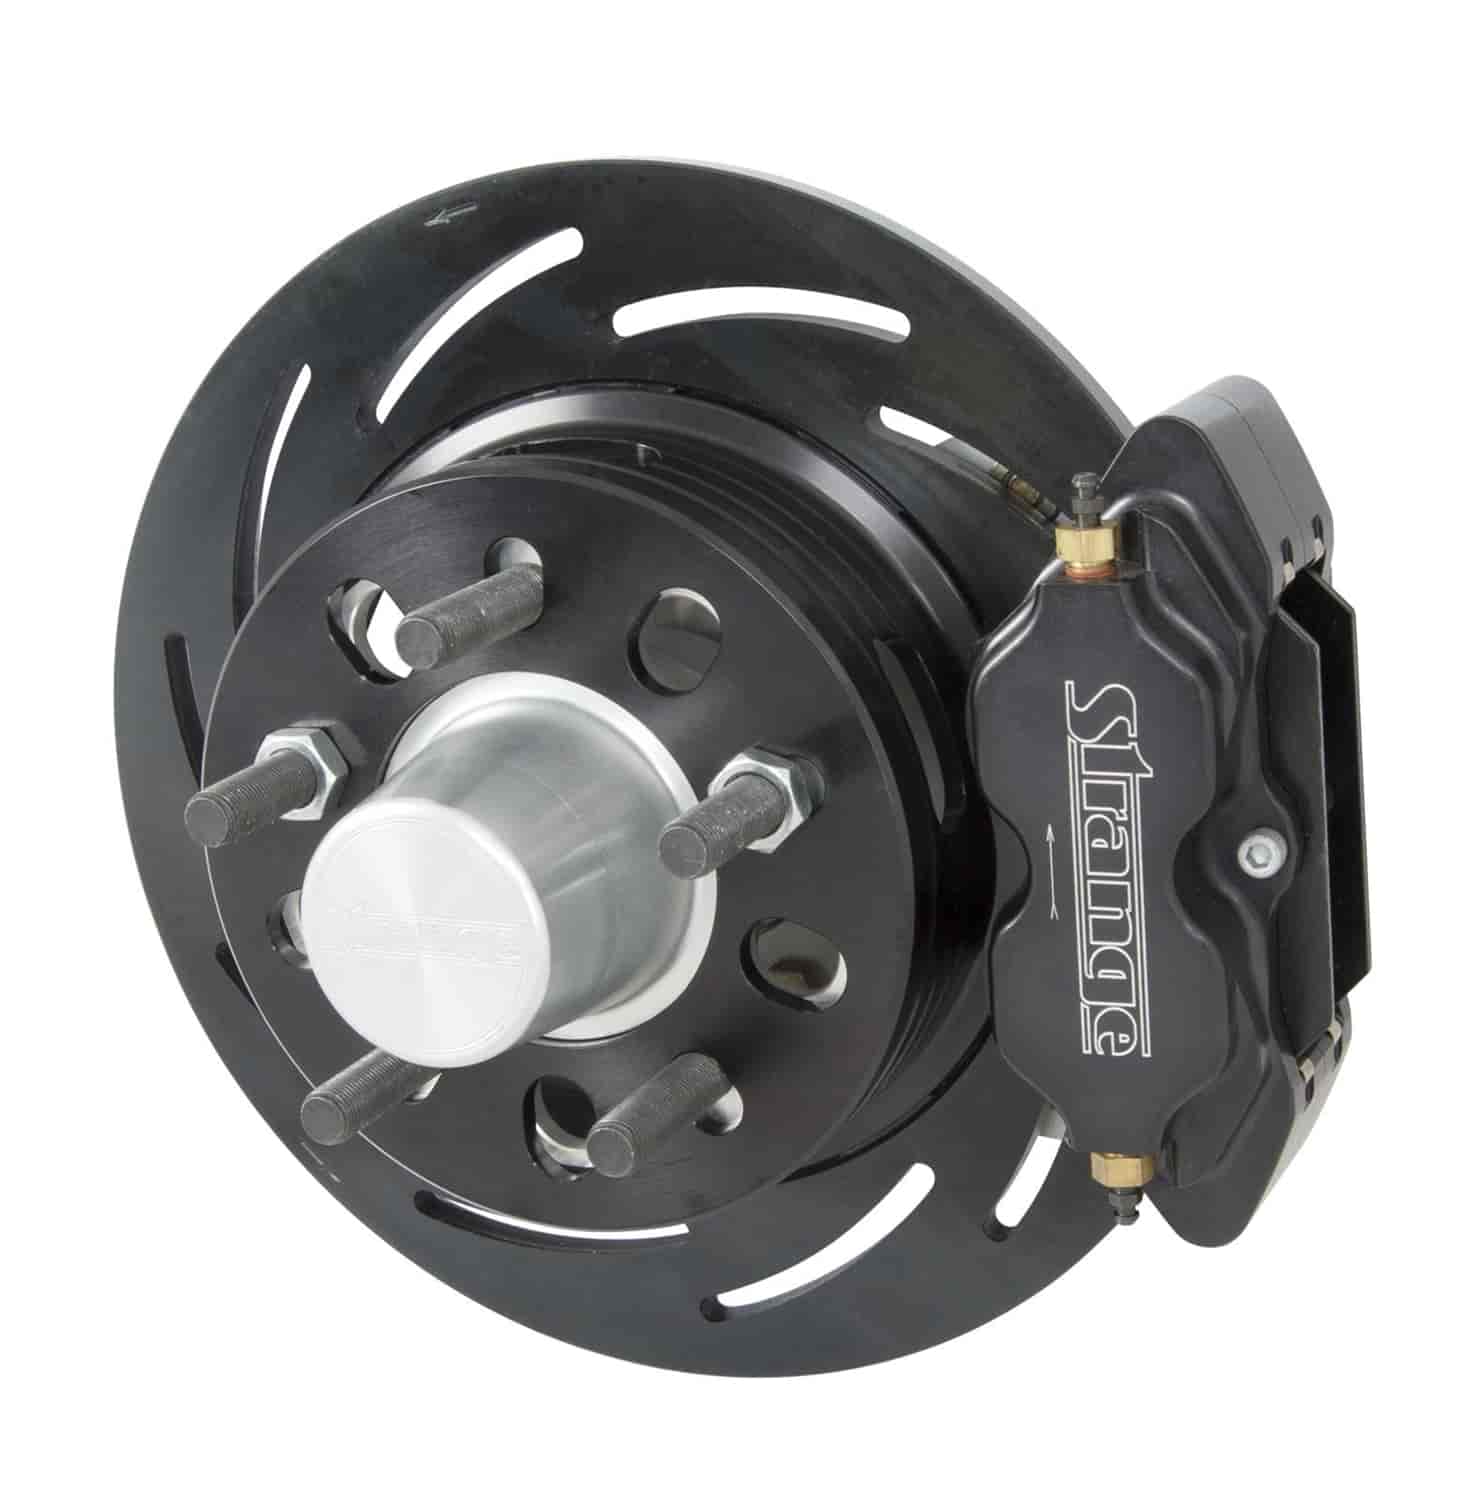 Front brake kit /87-present alum strut /4.50 bc /2 pc rotor